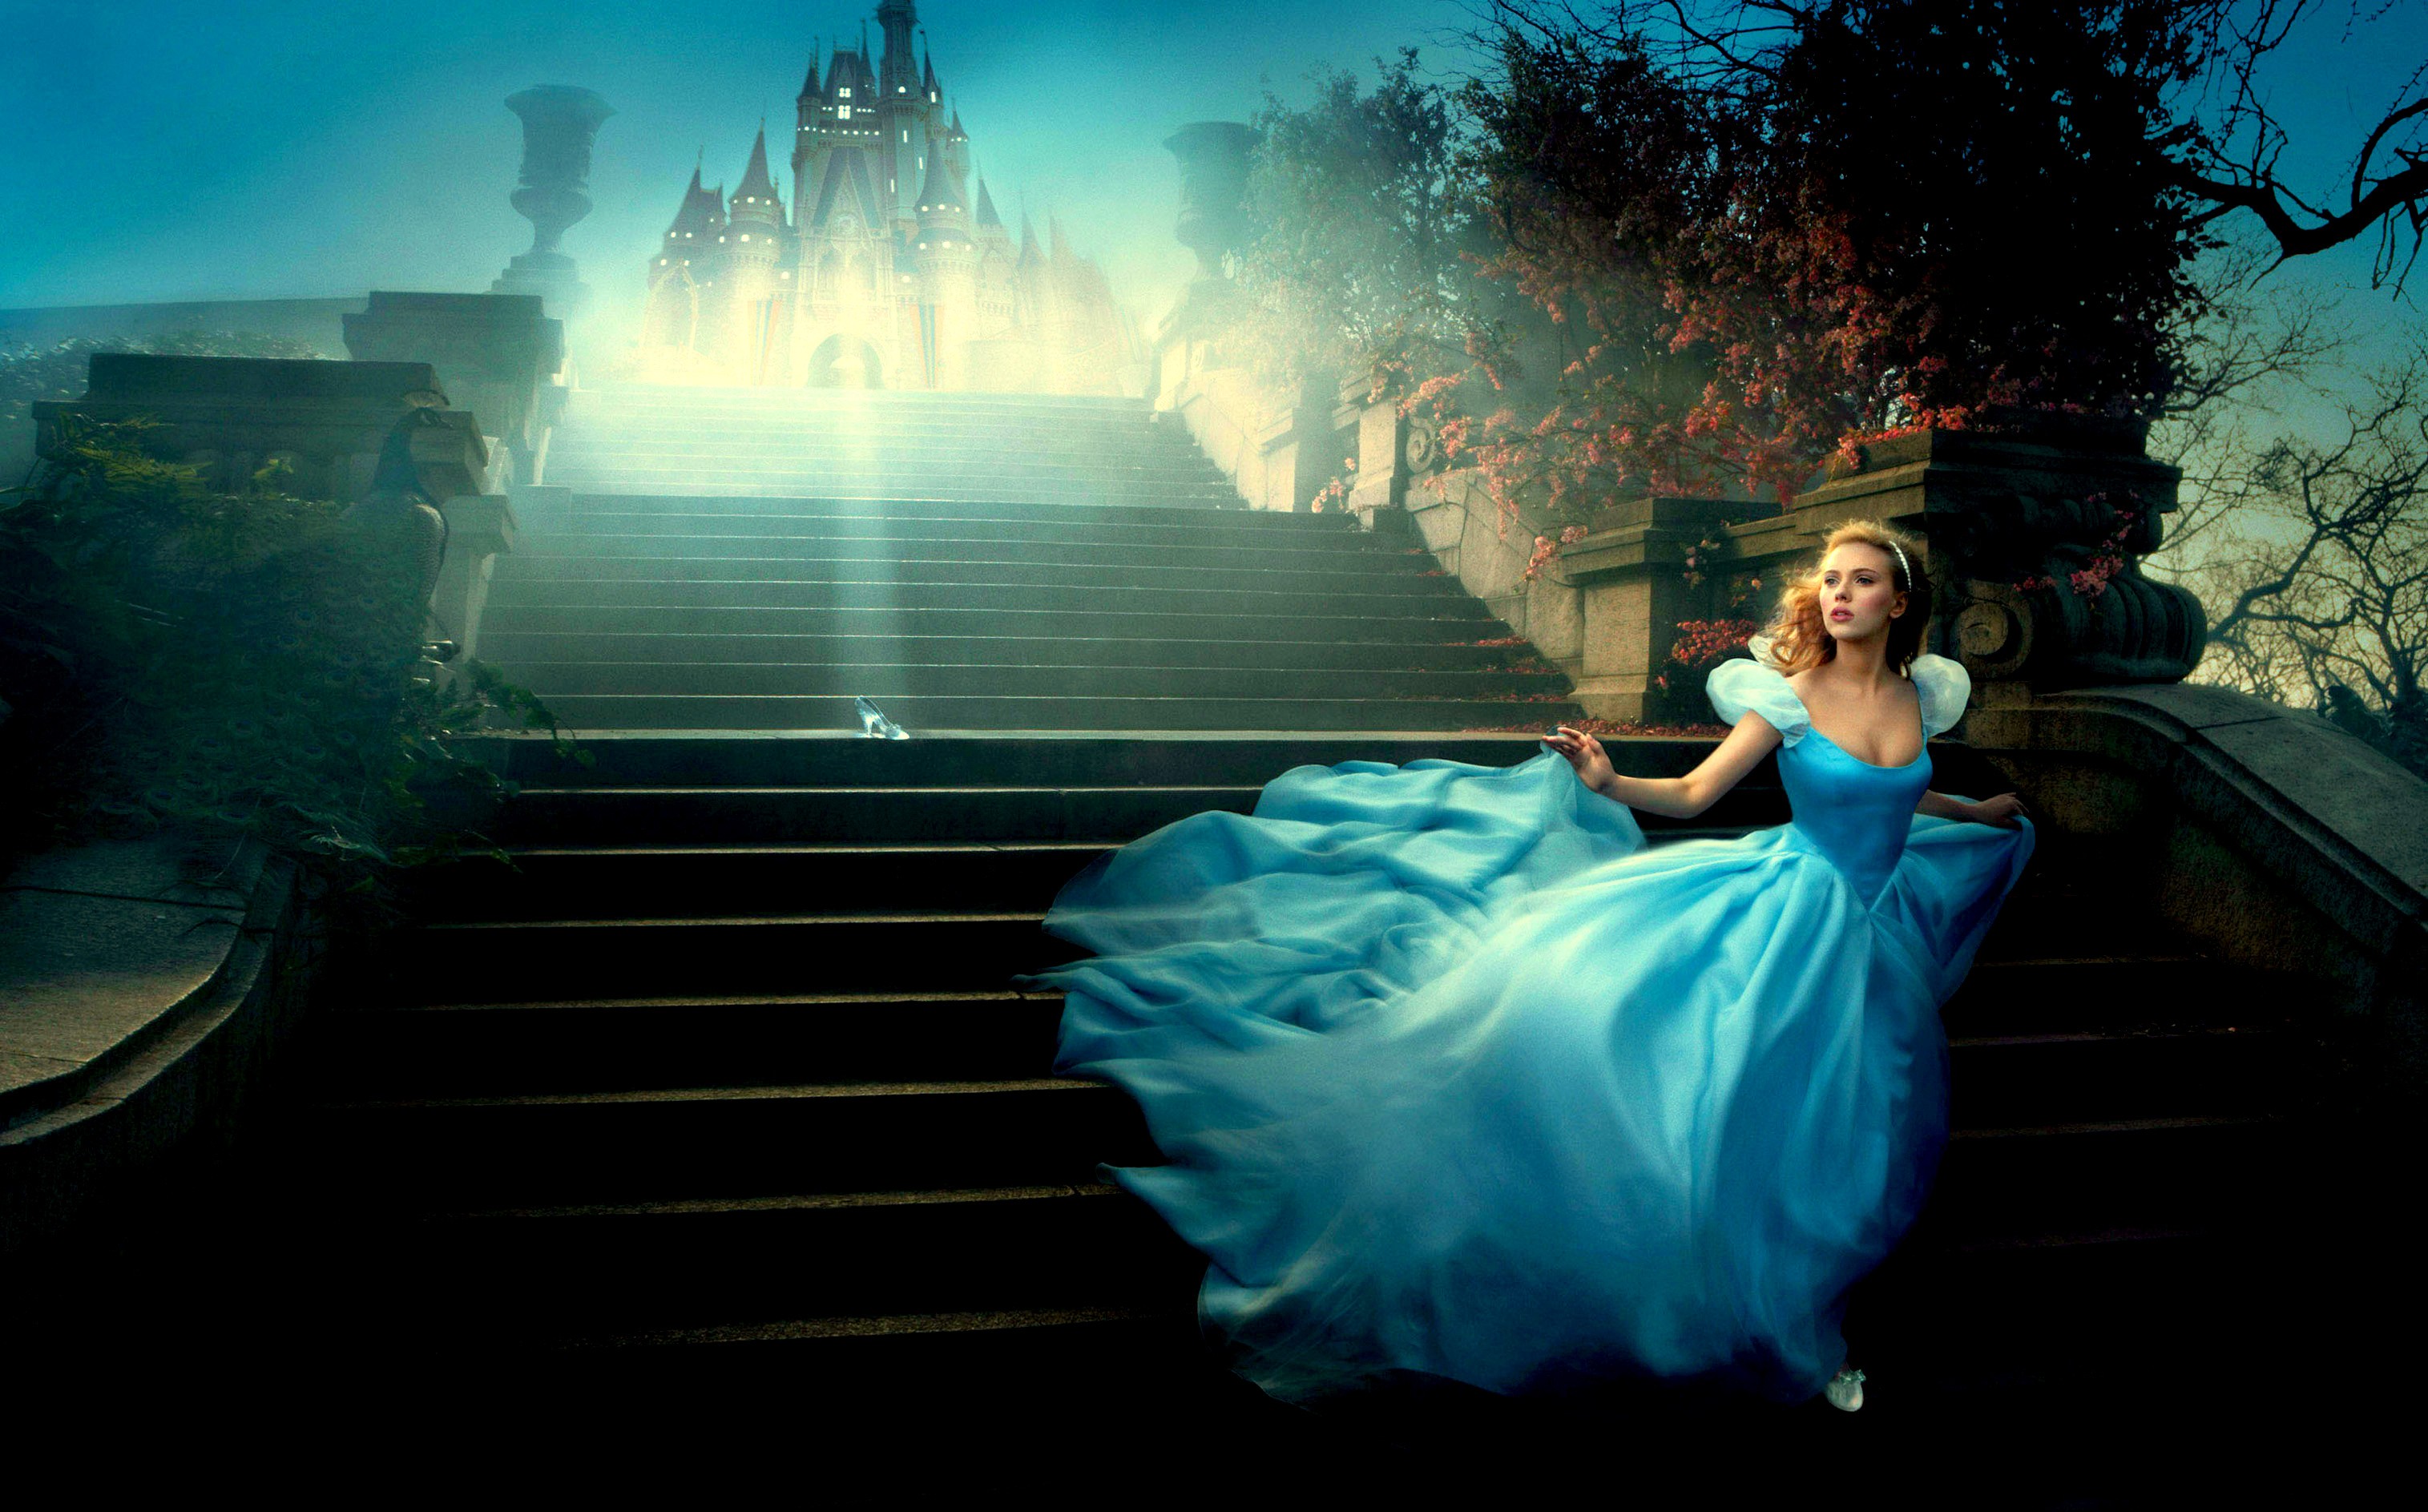 General 3030x1887 Scarlett Johansson dress blue dress castle fantasy girl women blue clothing American women actress